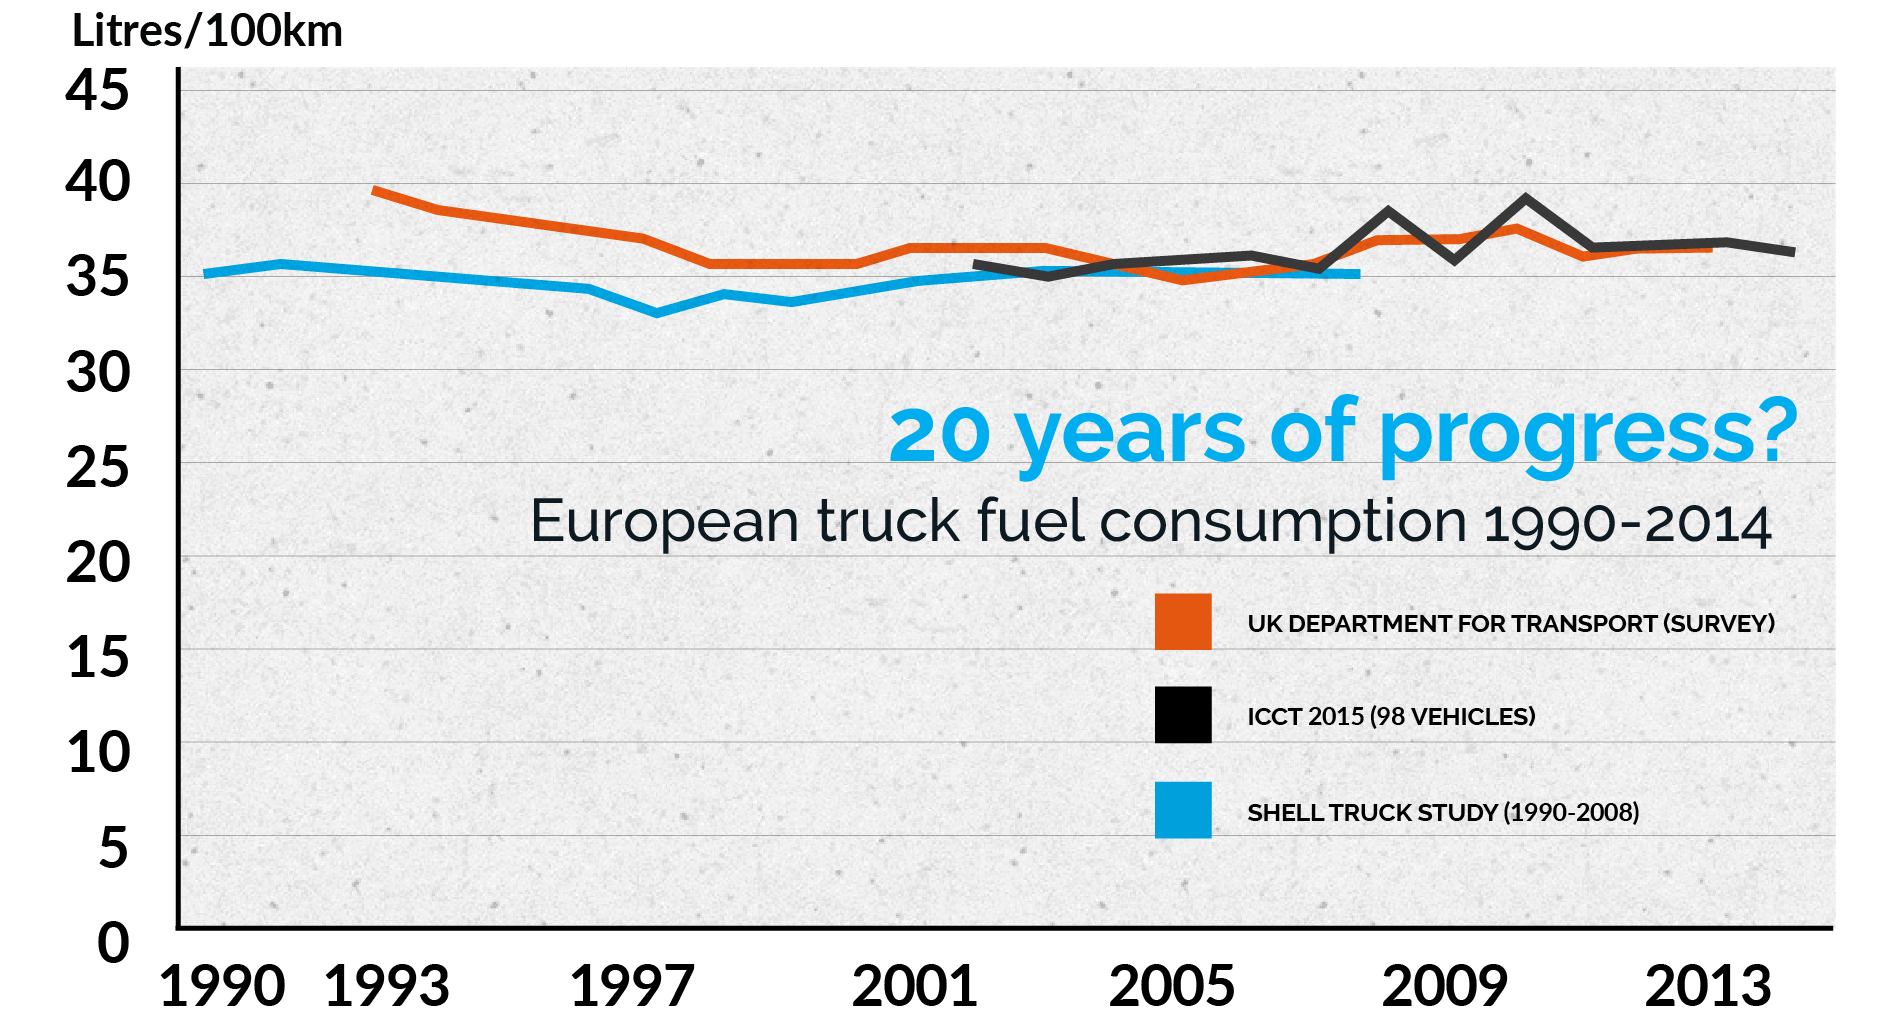 20 years of progress?
European truck fuel consumption 1990-2014